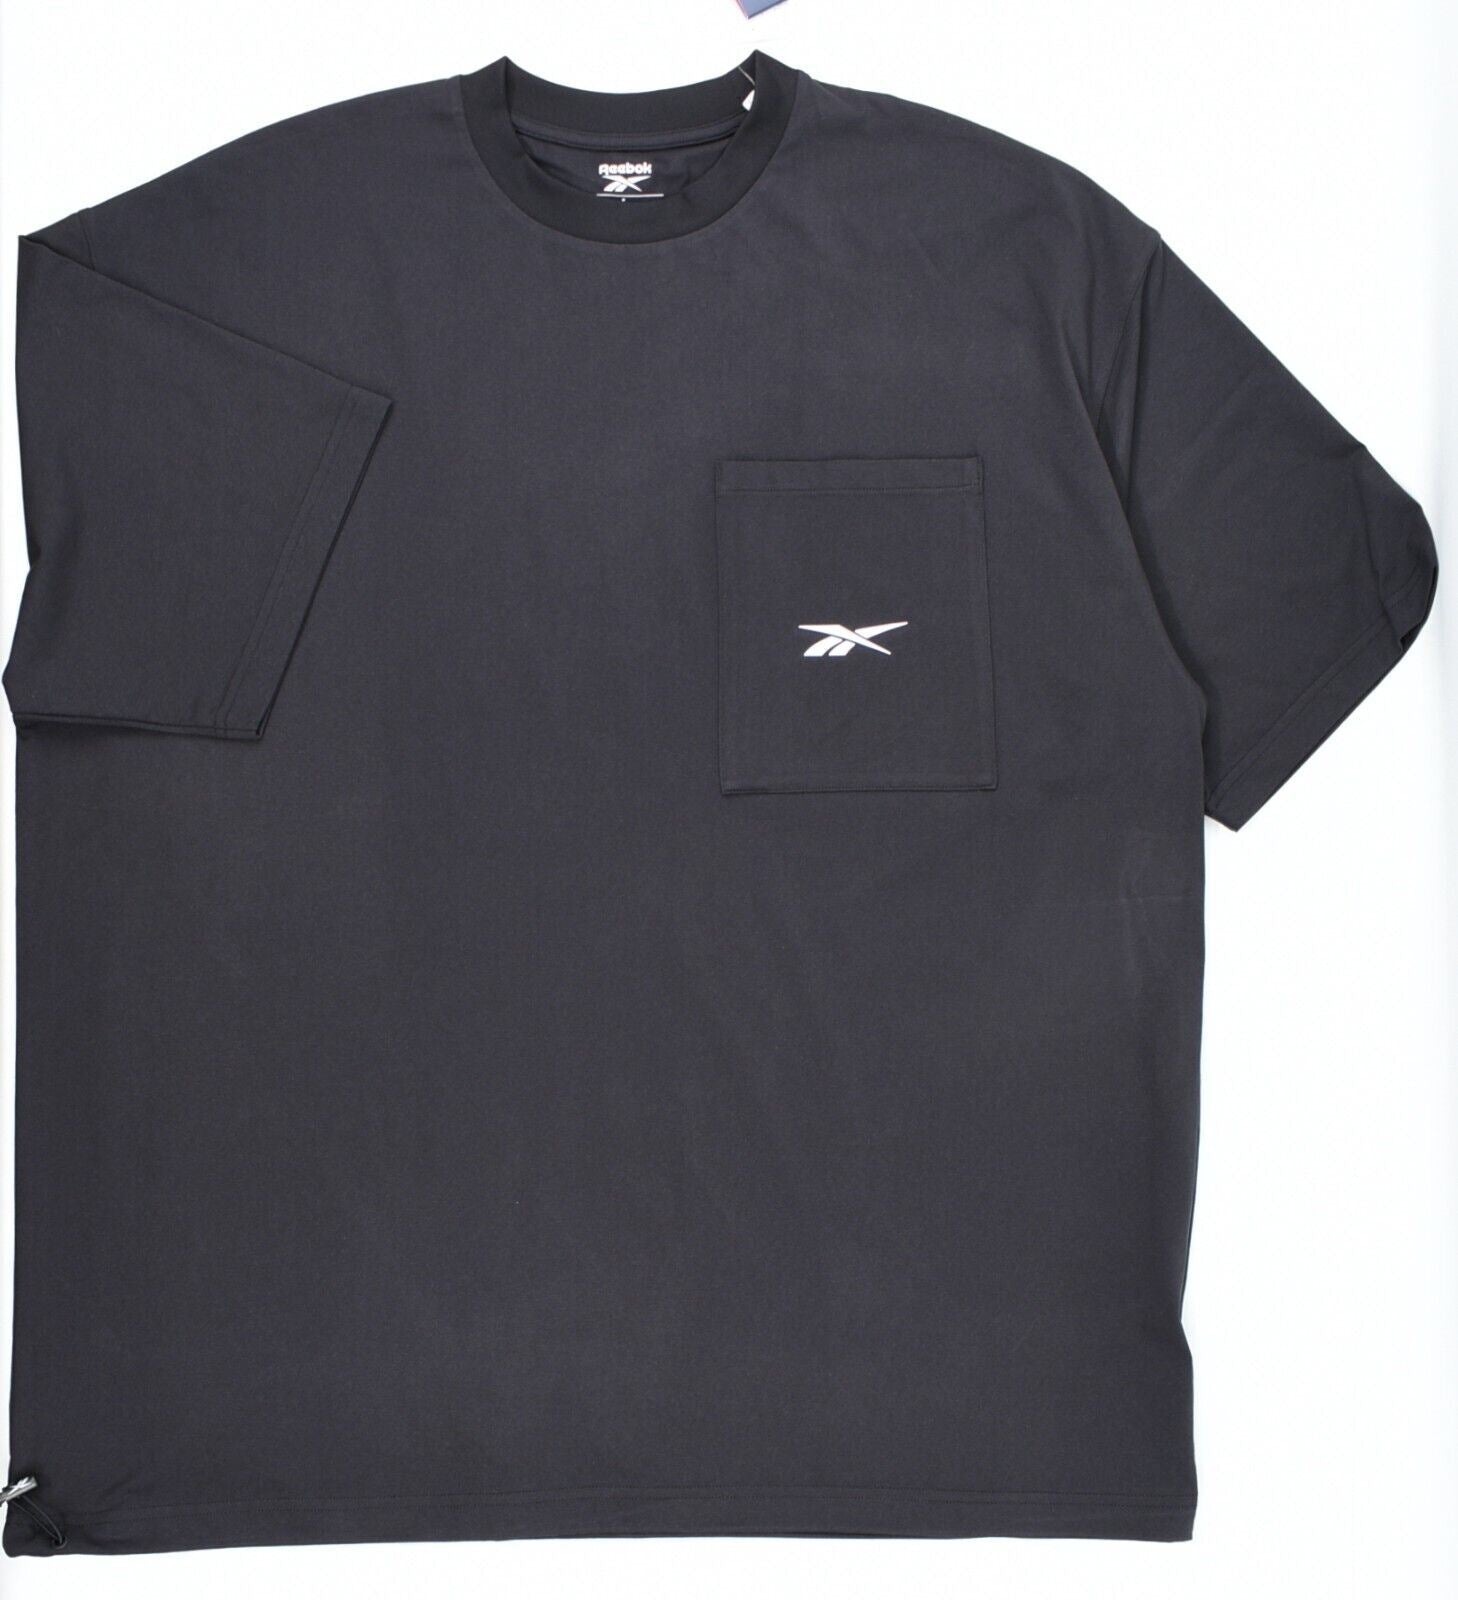 REEBOK Activewear: Men's VECTOR TEE, Black T-shirt, size L-XL